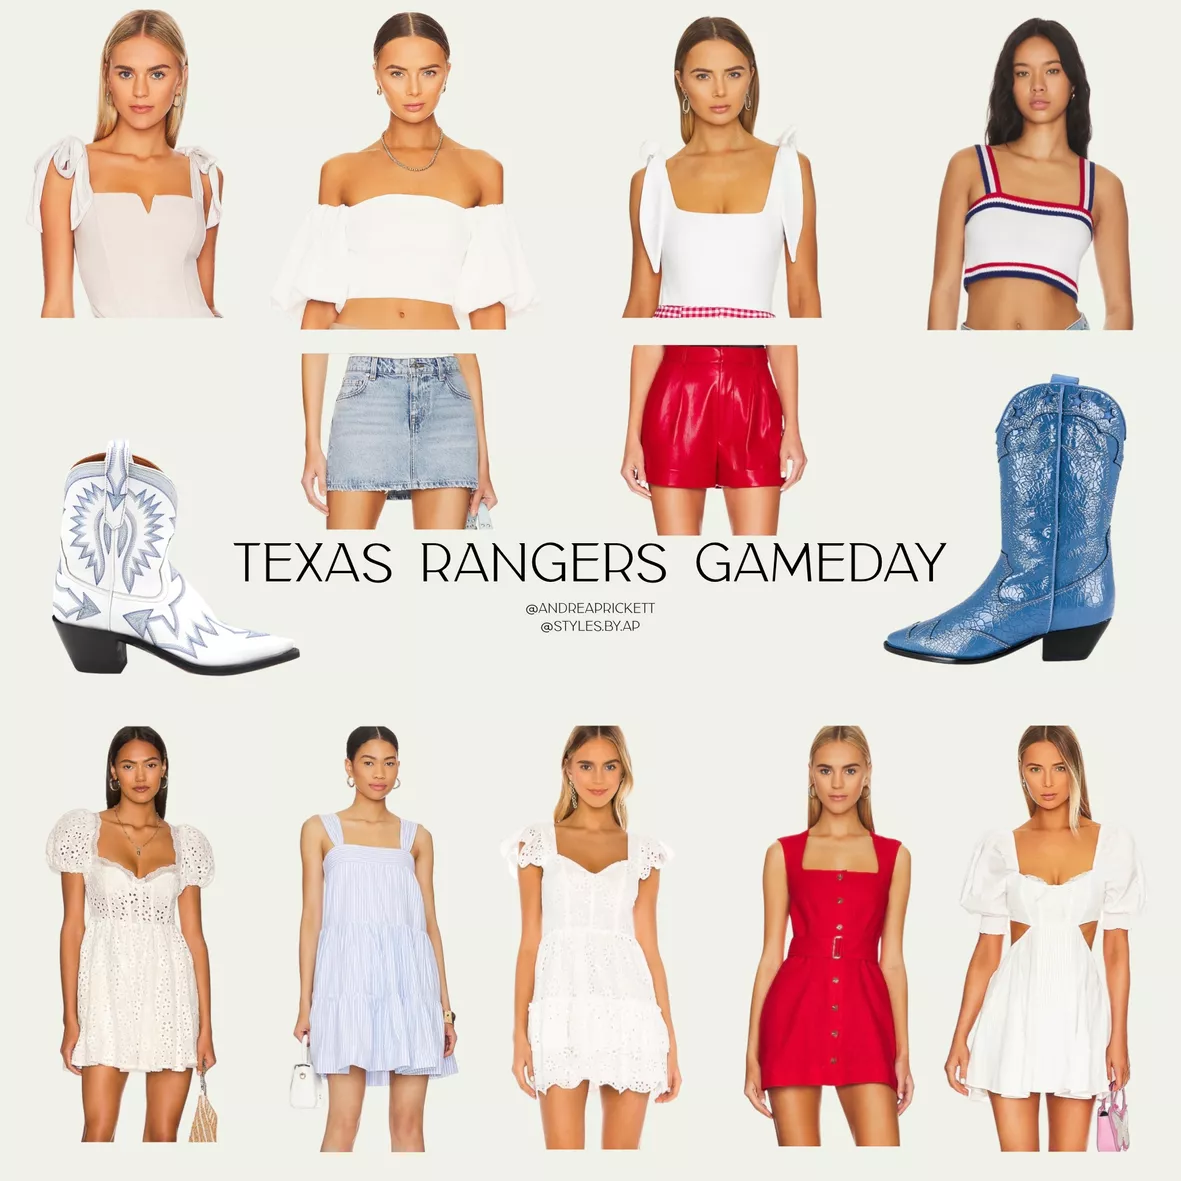 Texas Rangers Game Day Attire